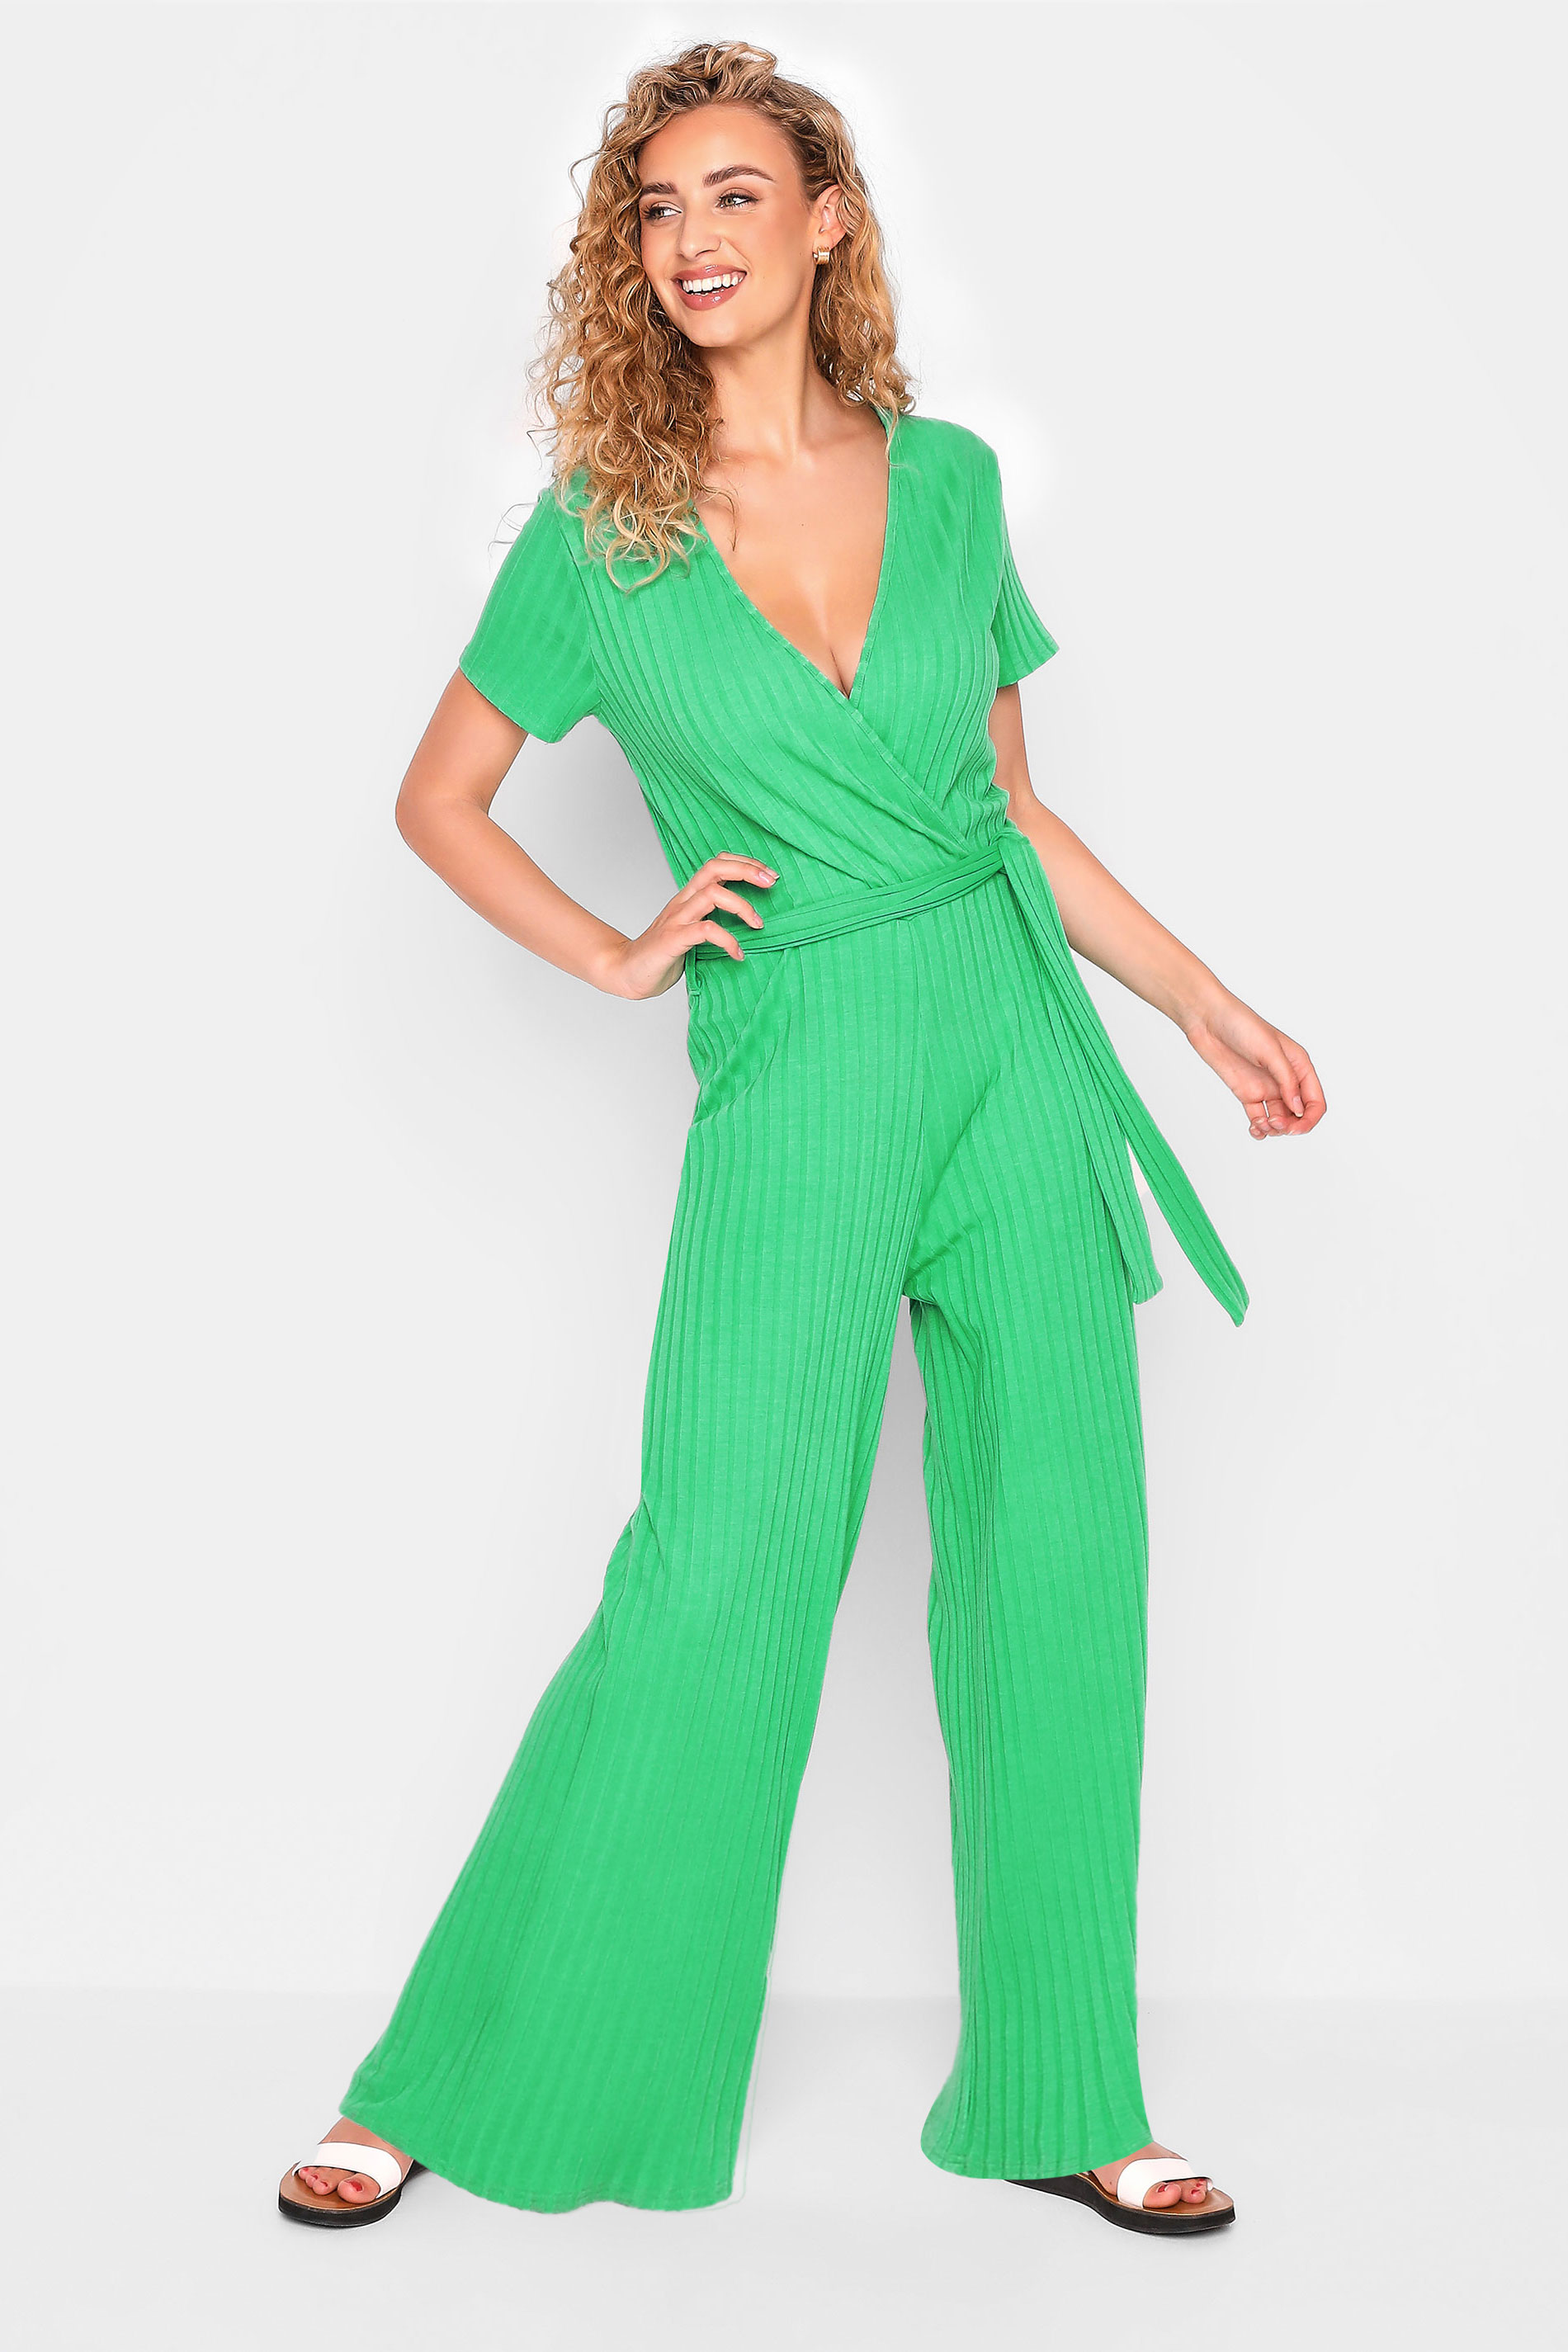 LTS Tall Women's Bright Green Wrap Jumpsuit | Long Tall Sally  1